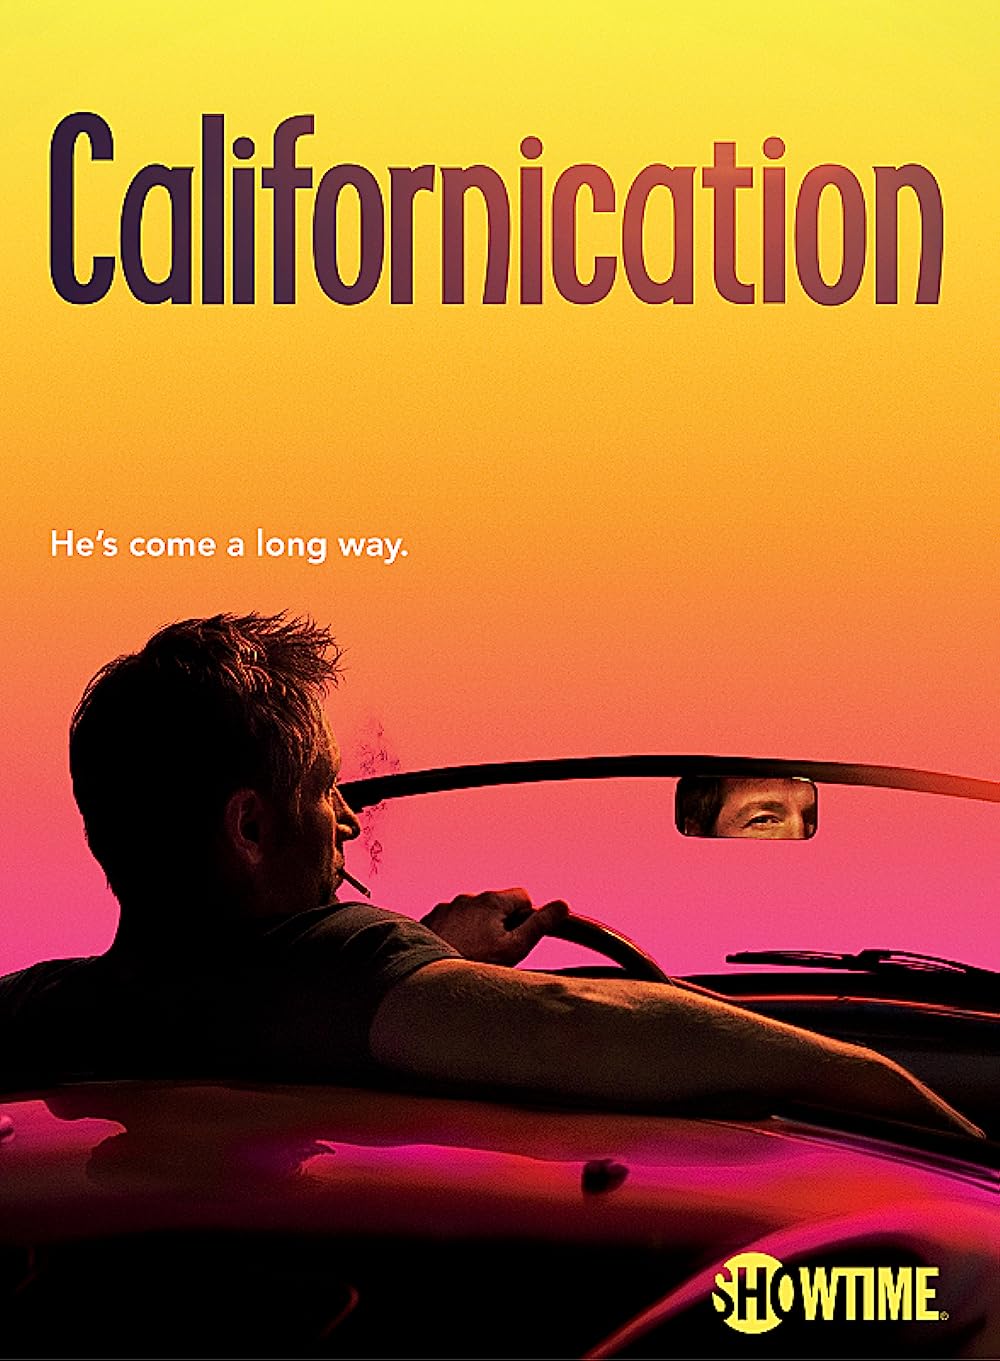 Californication poster